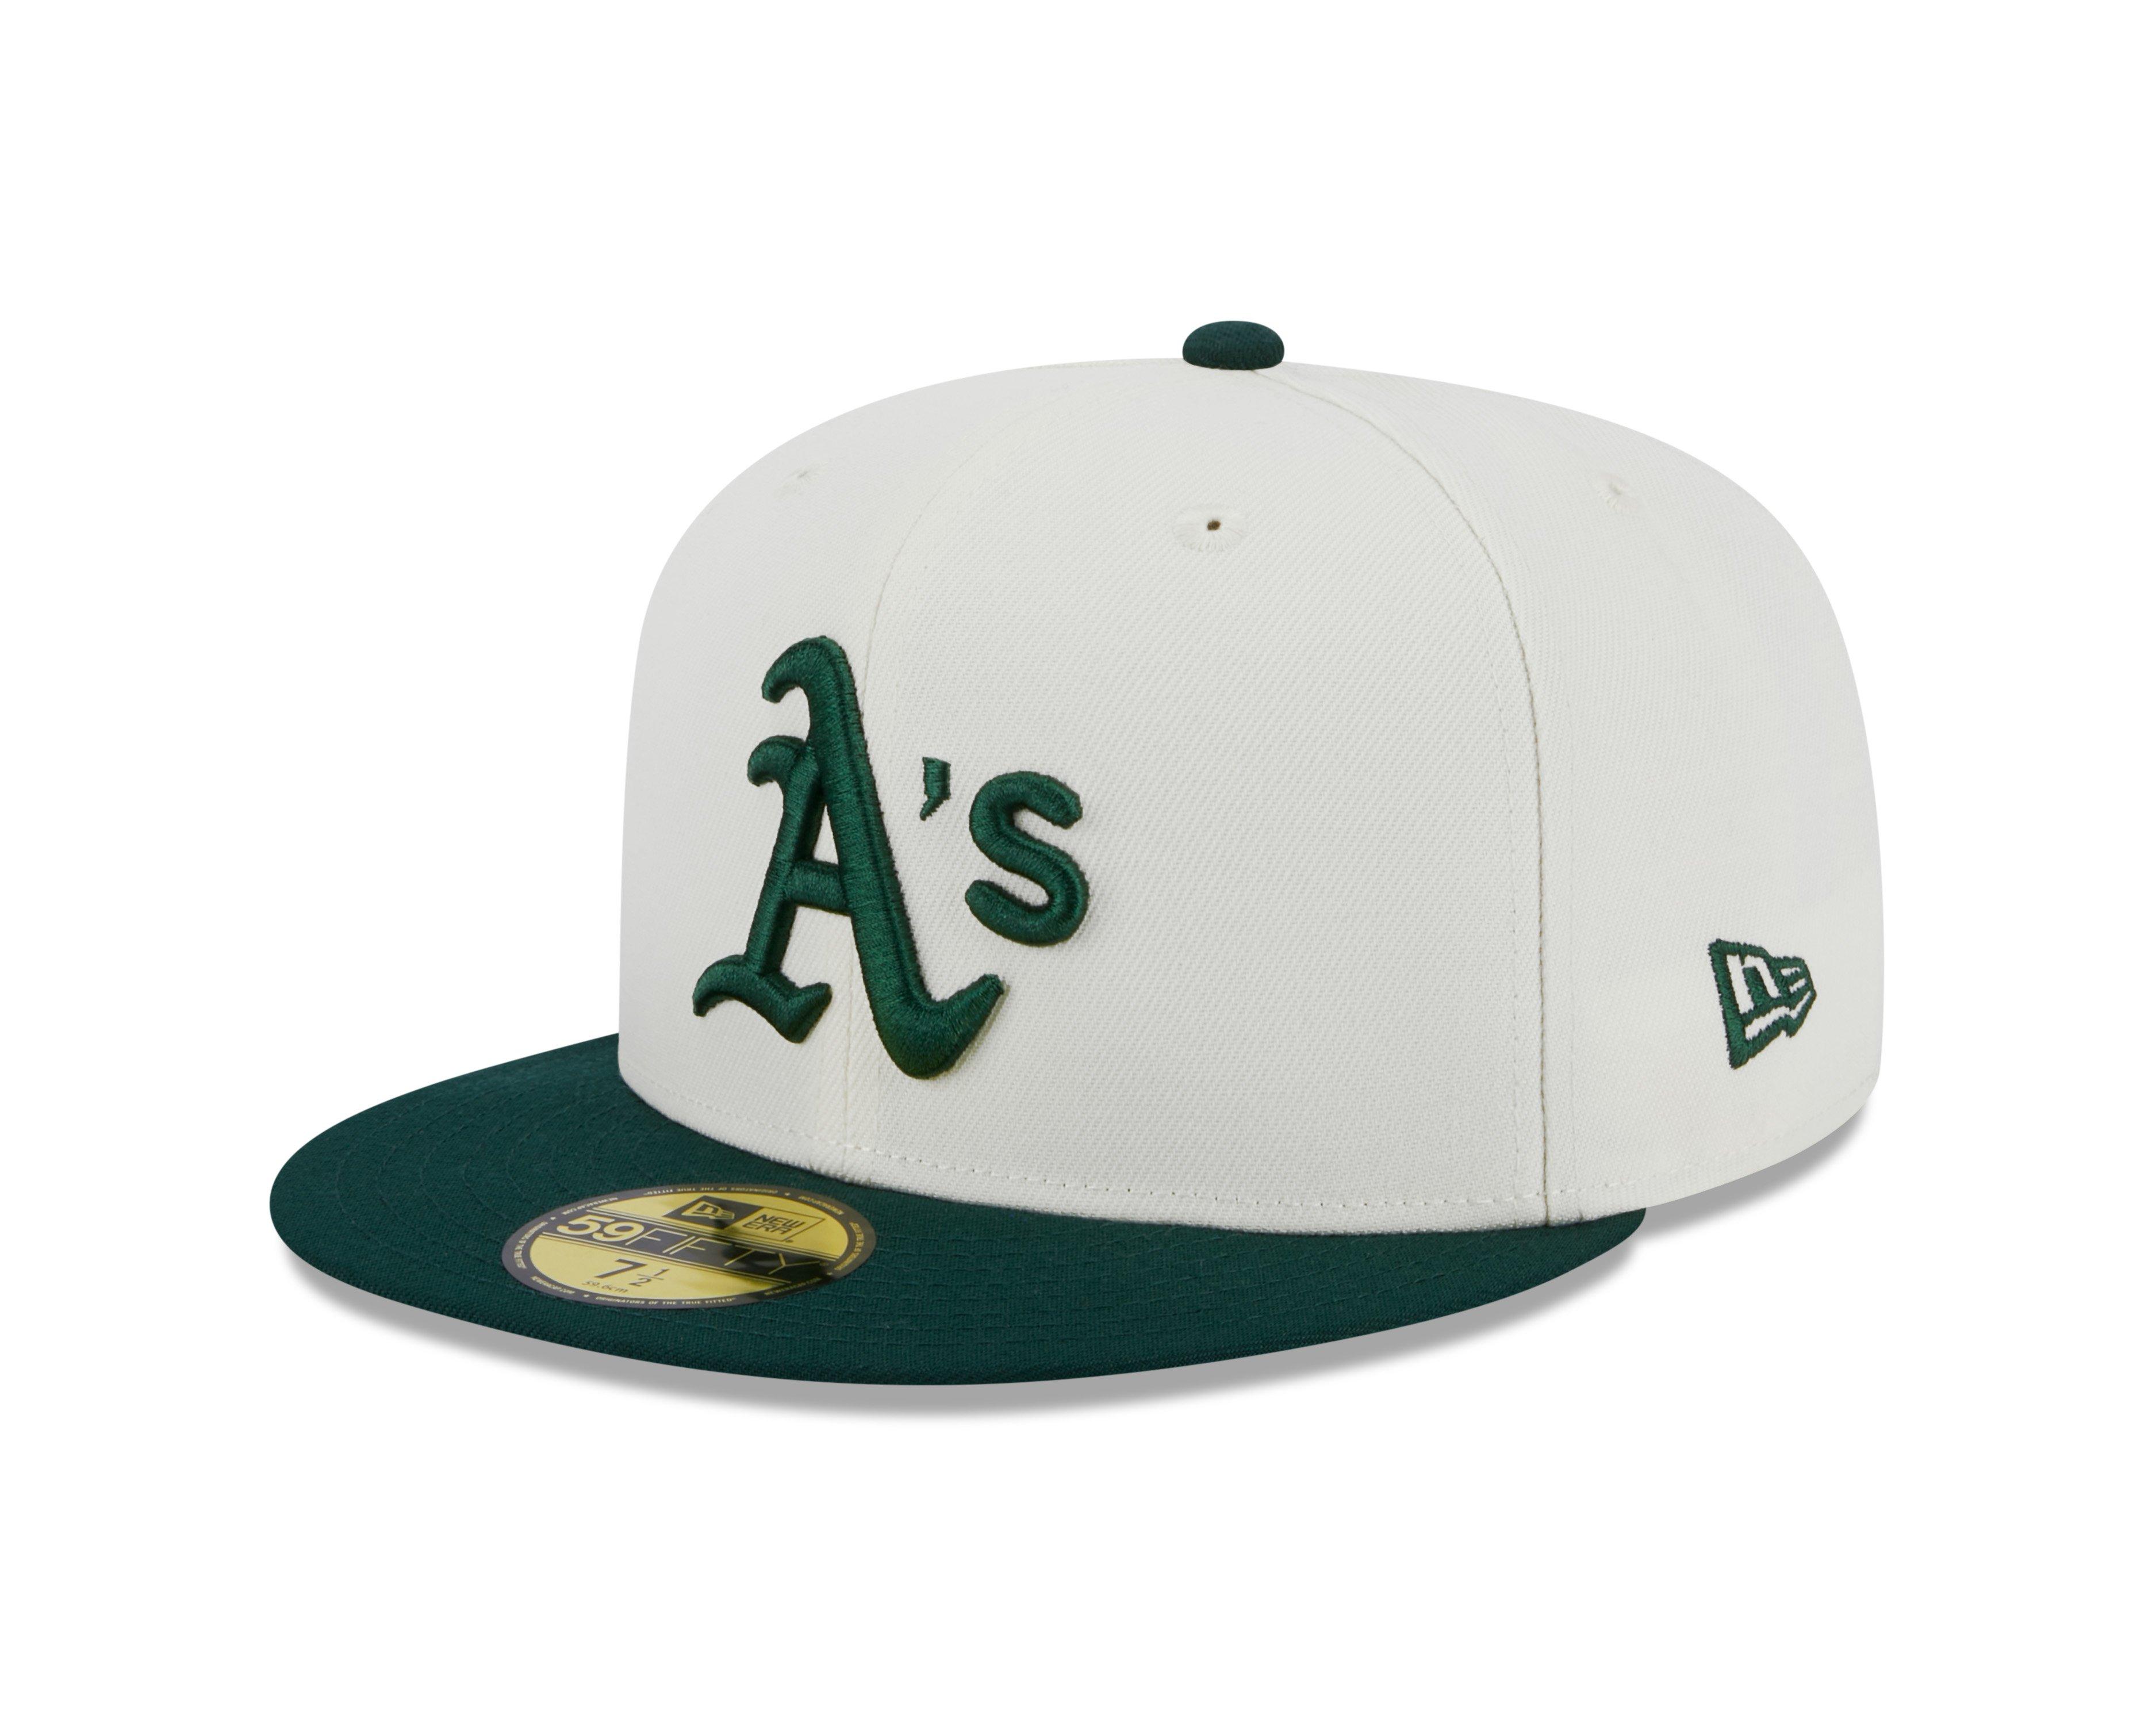 Oakland Athletics Black MLB Fan Cap, Hats for sale